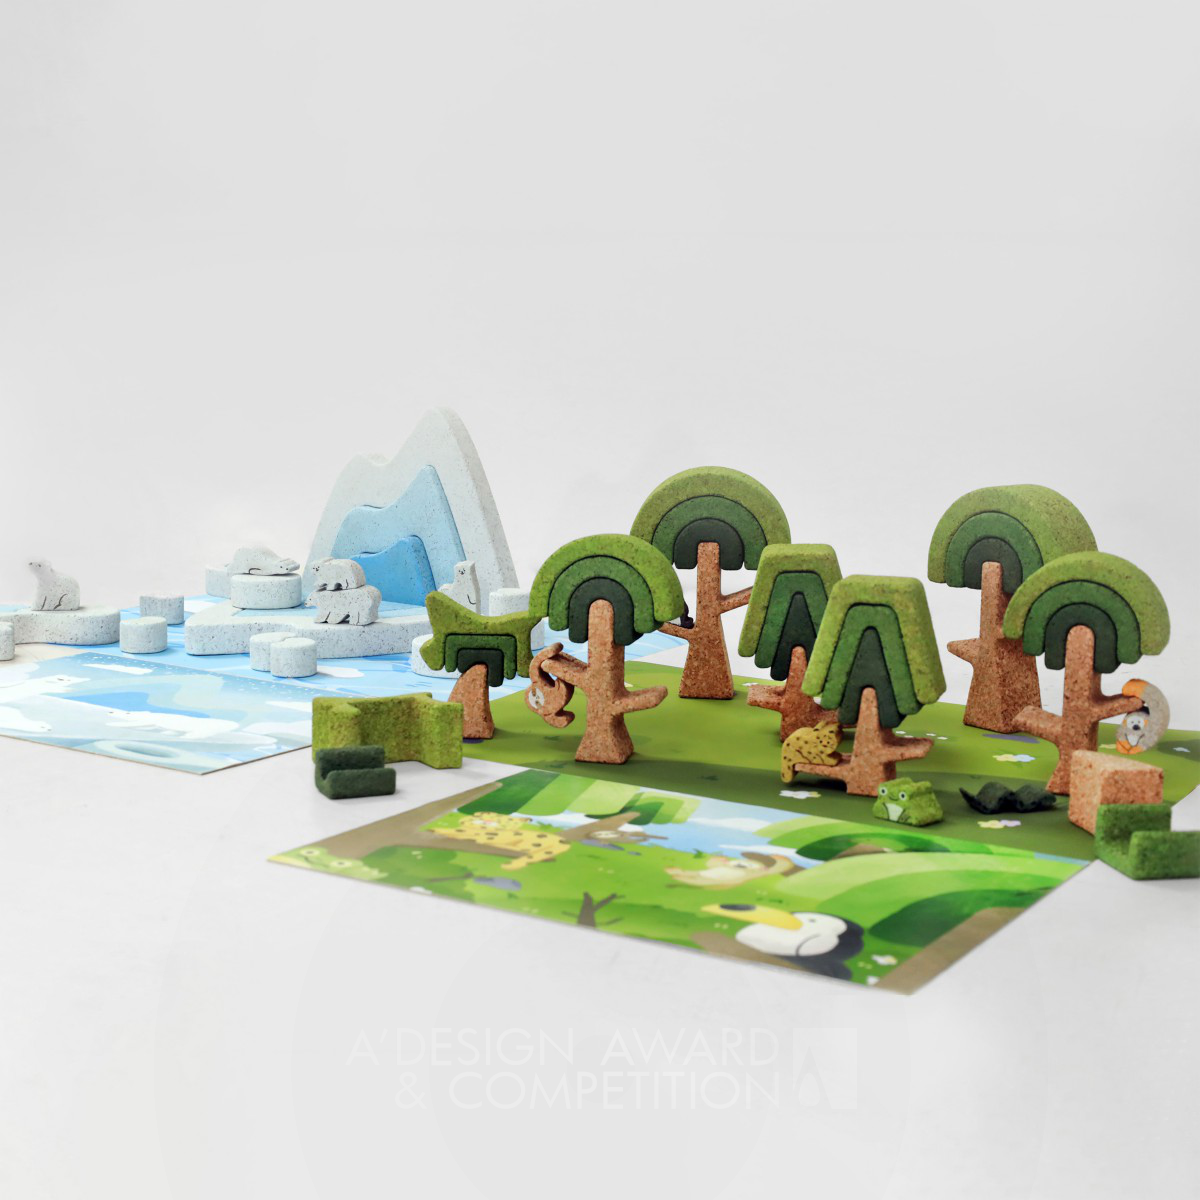 ChungSheng Chen's "Habitat" Educational Toy Brick